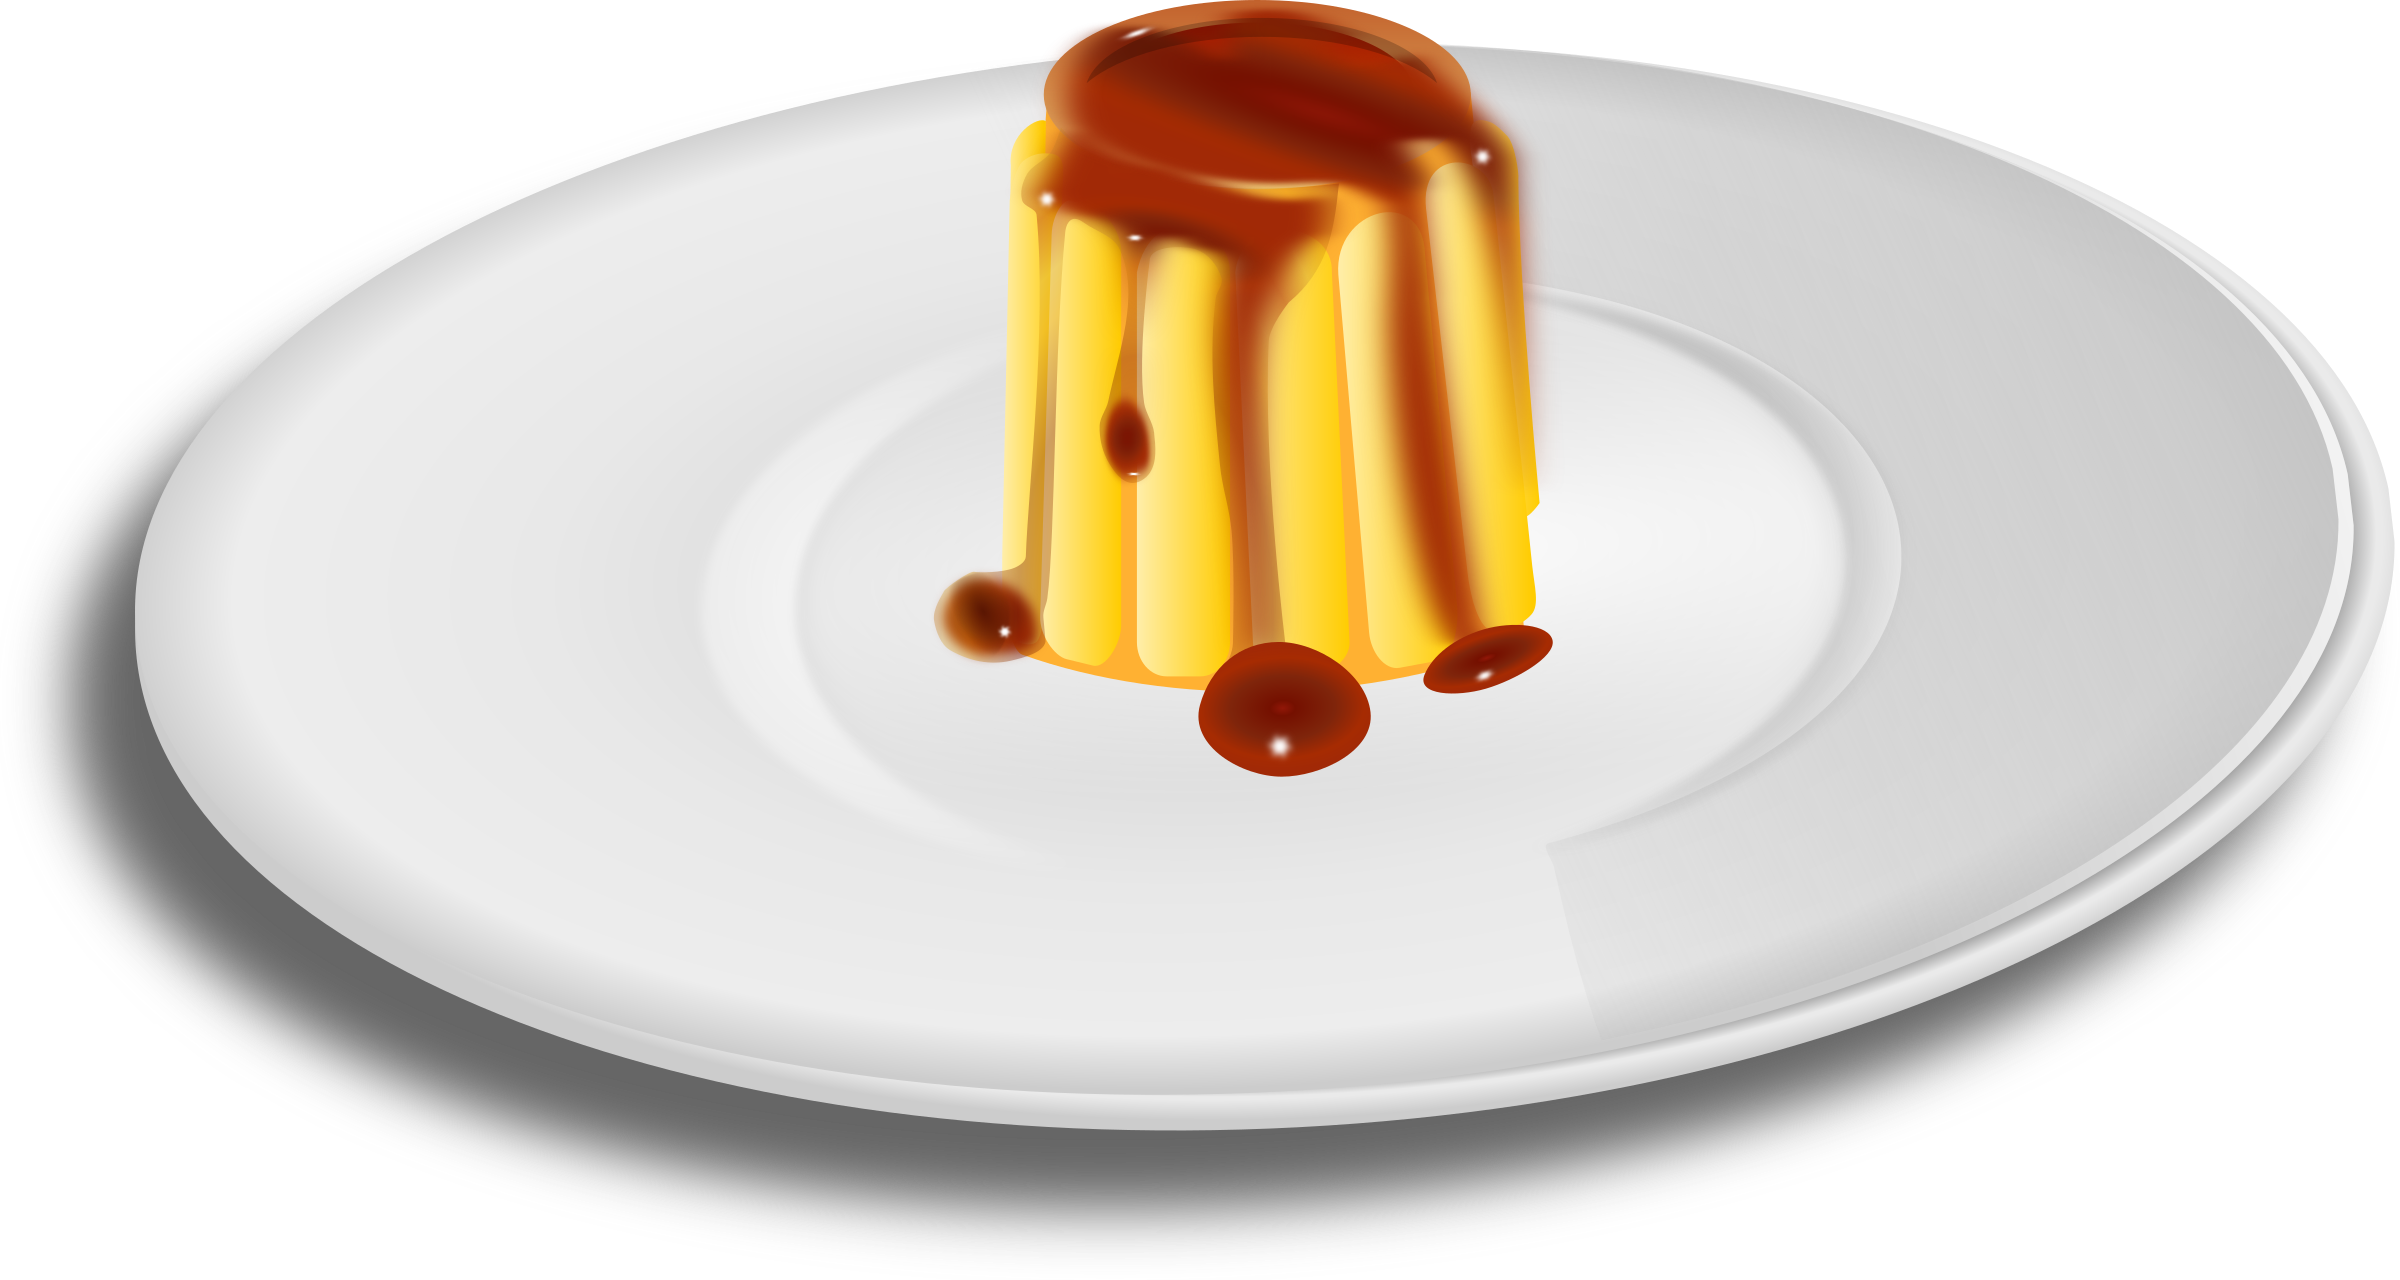 Free Dessert Pudding Clip Art - 50 Decadent Pudding Recipes (2400x1280)